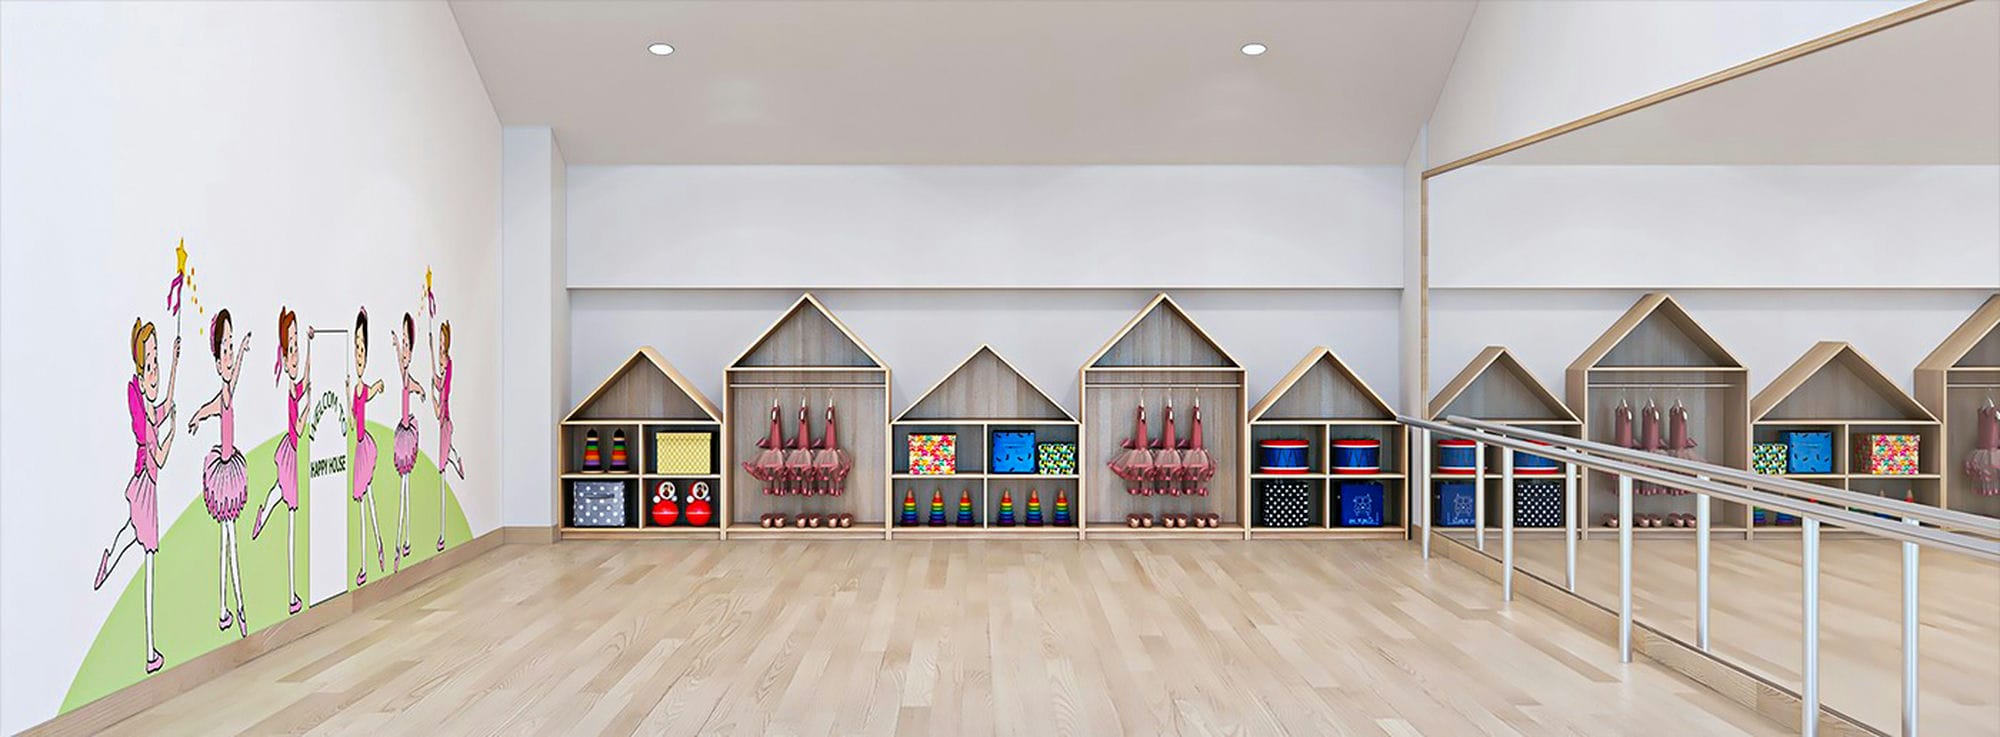 Canteen 3D Design of Happy House Preschool